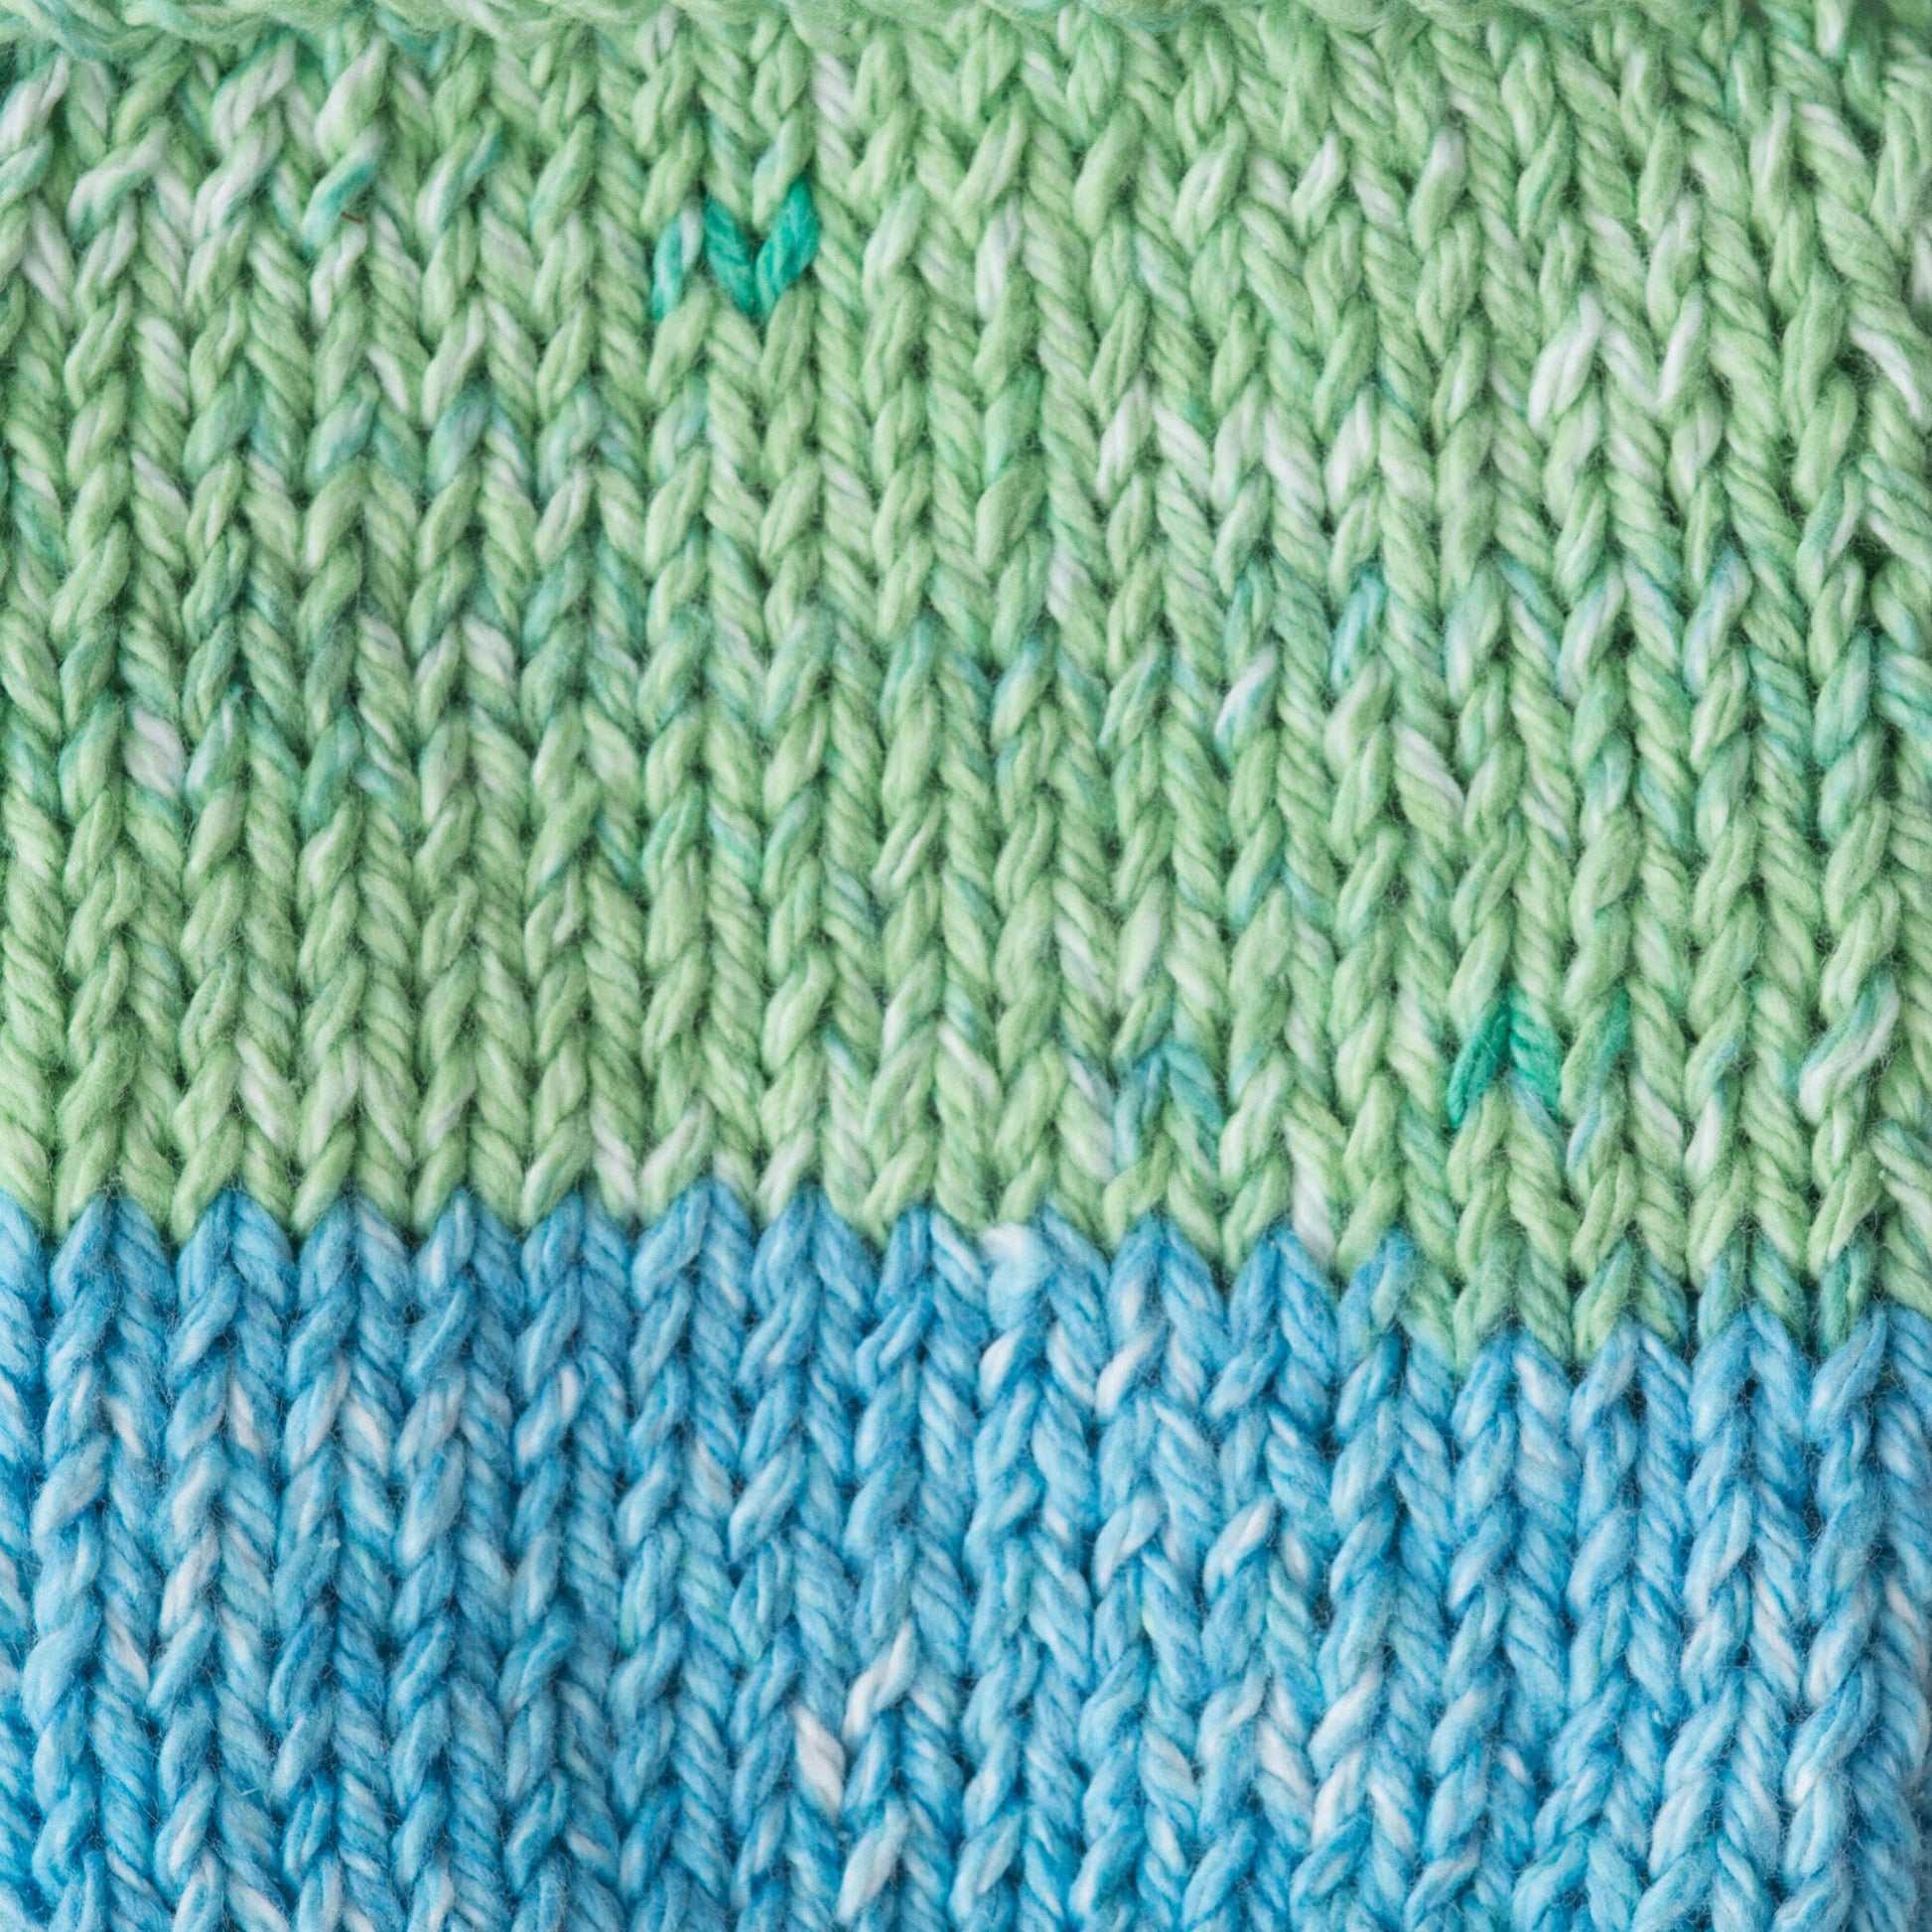 Lily Sugar and Cream Cotton Yarn, Natural Stripes, 285 Foot